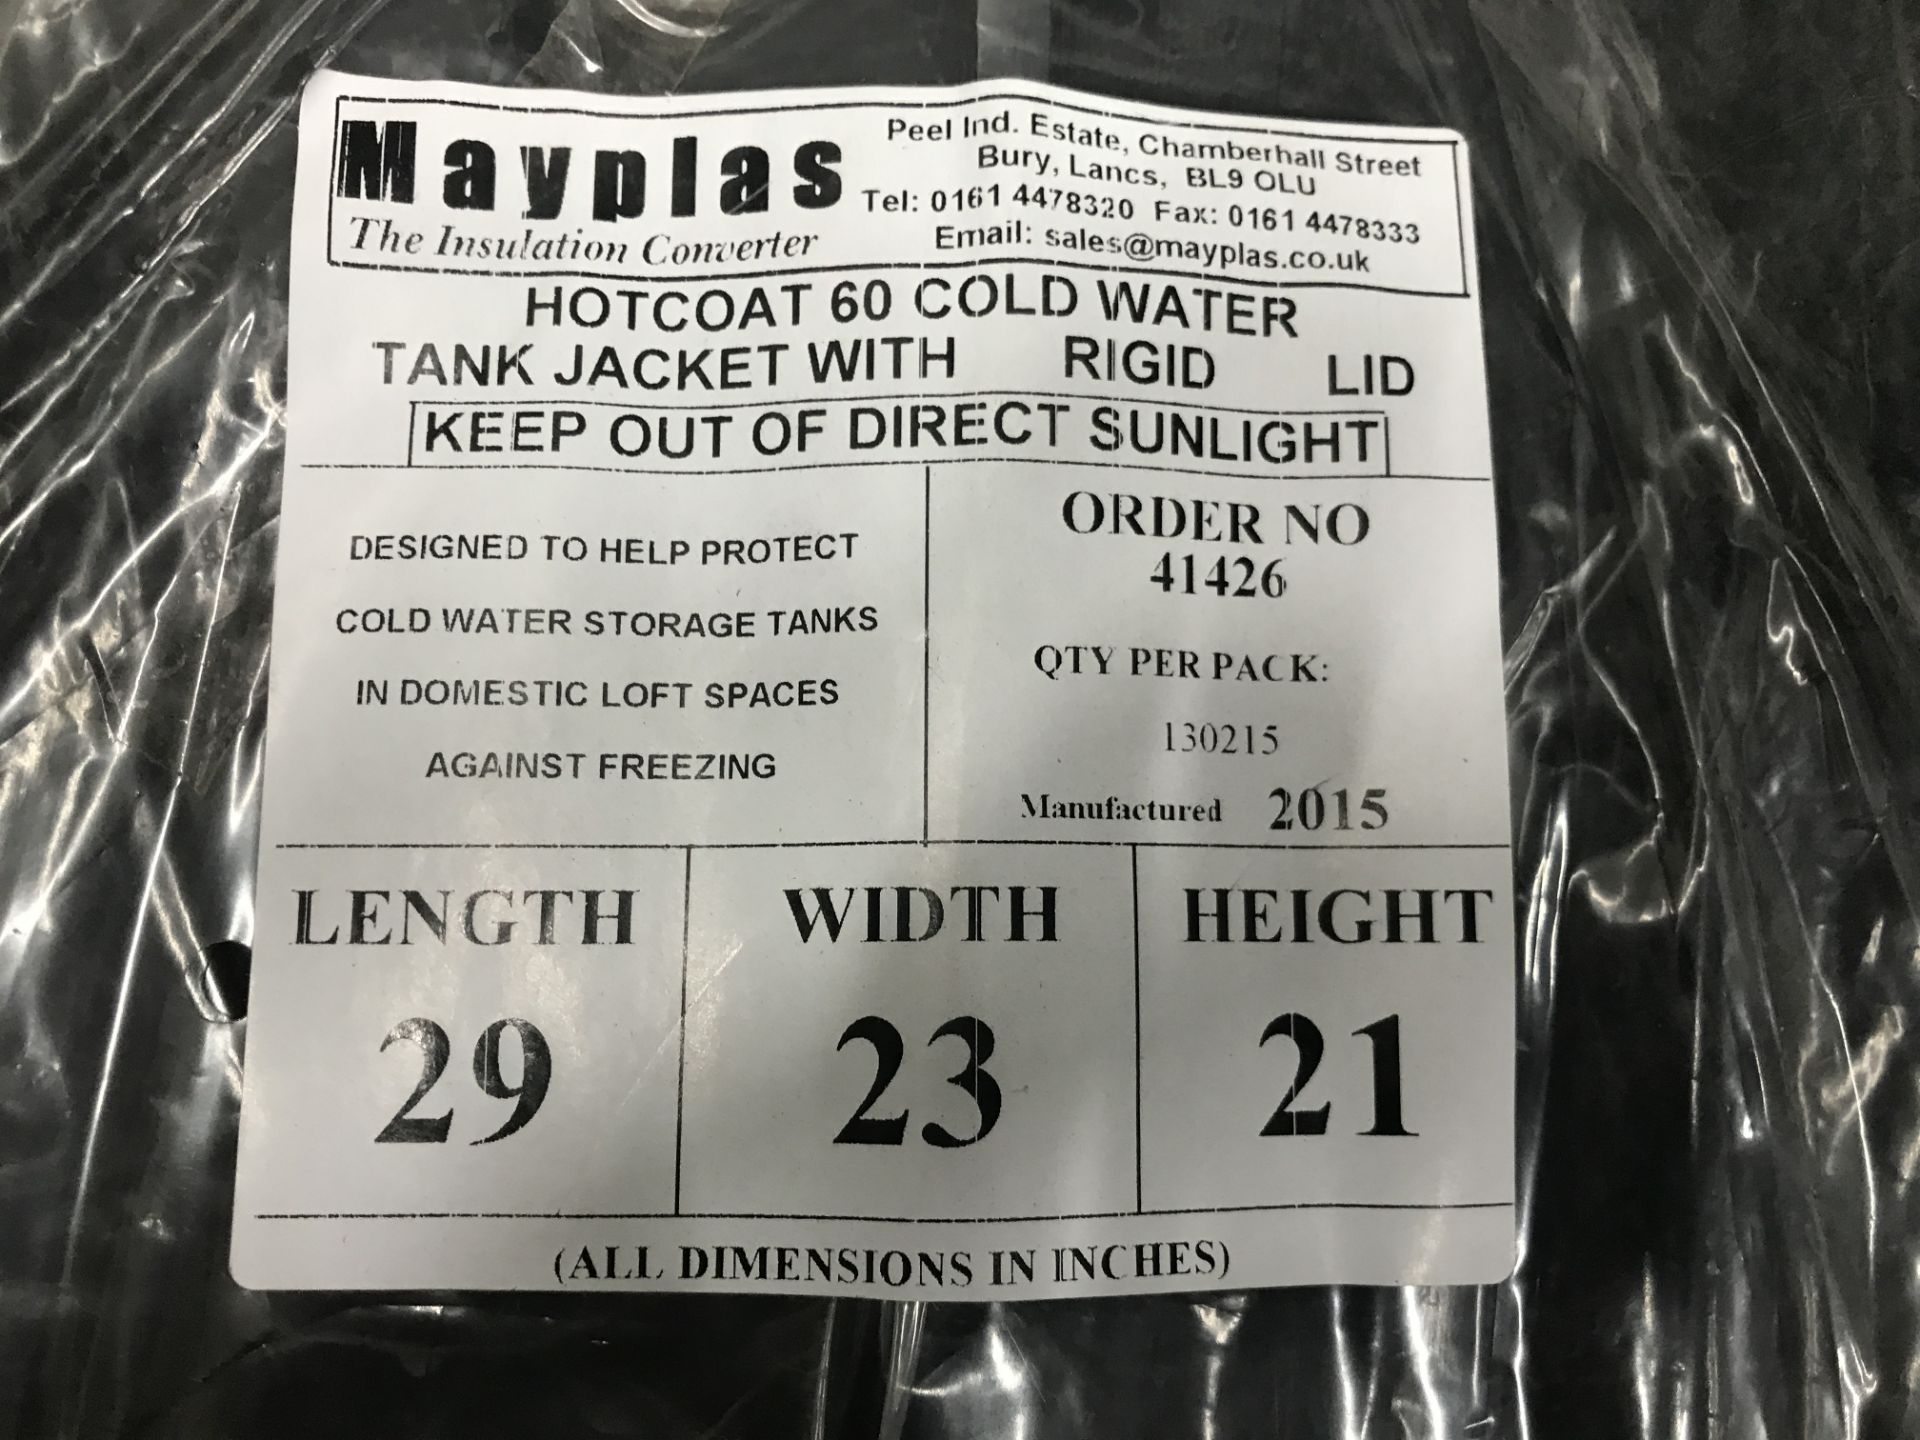 20 x Rigid Lid Boiler Jackets - 29" x 23" x 21" - Image 2 of 2